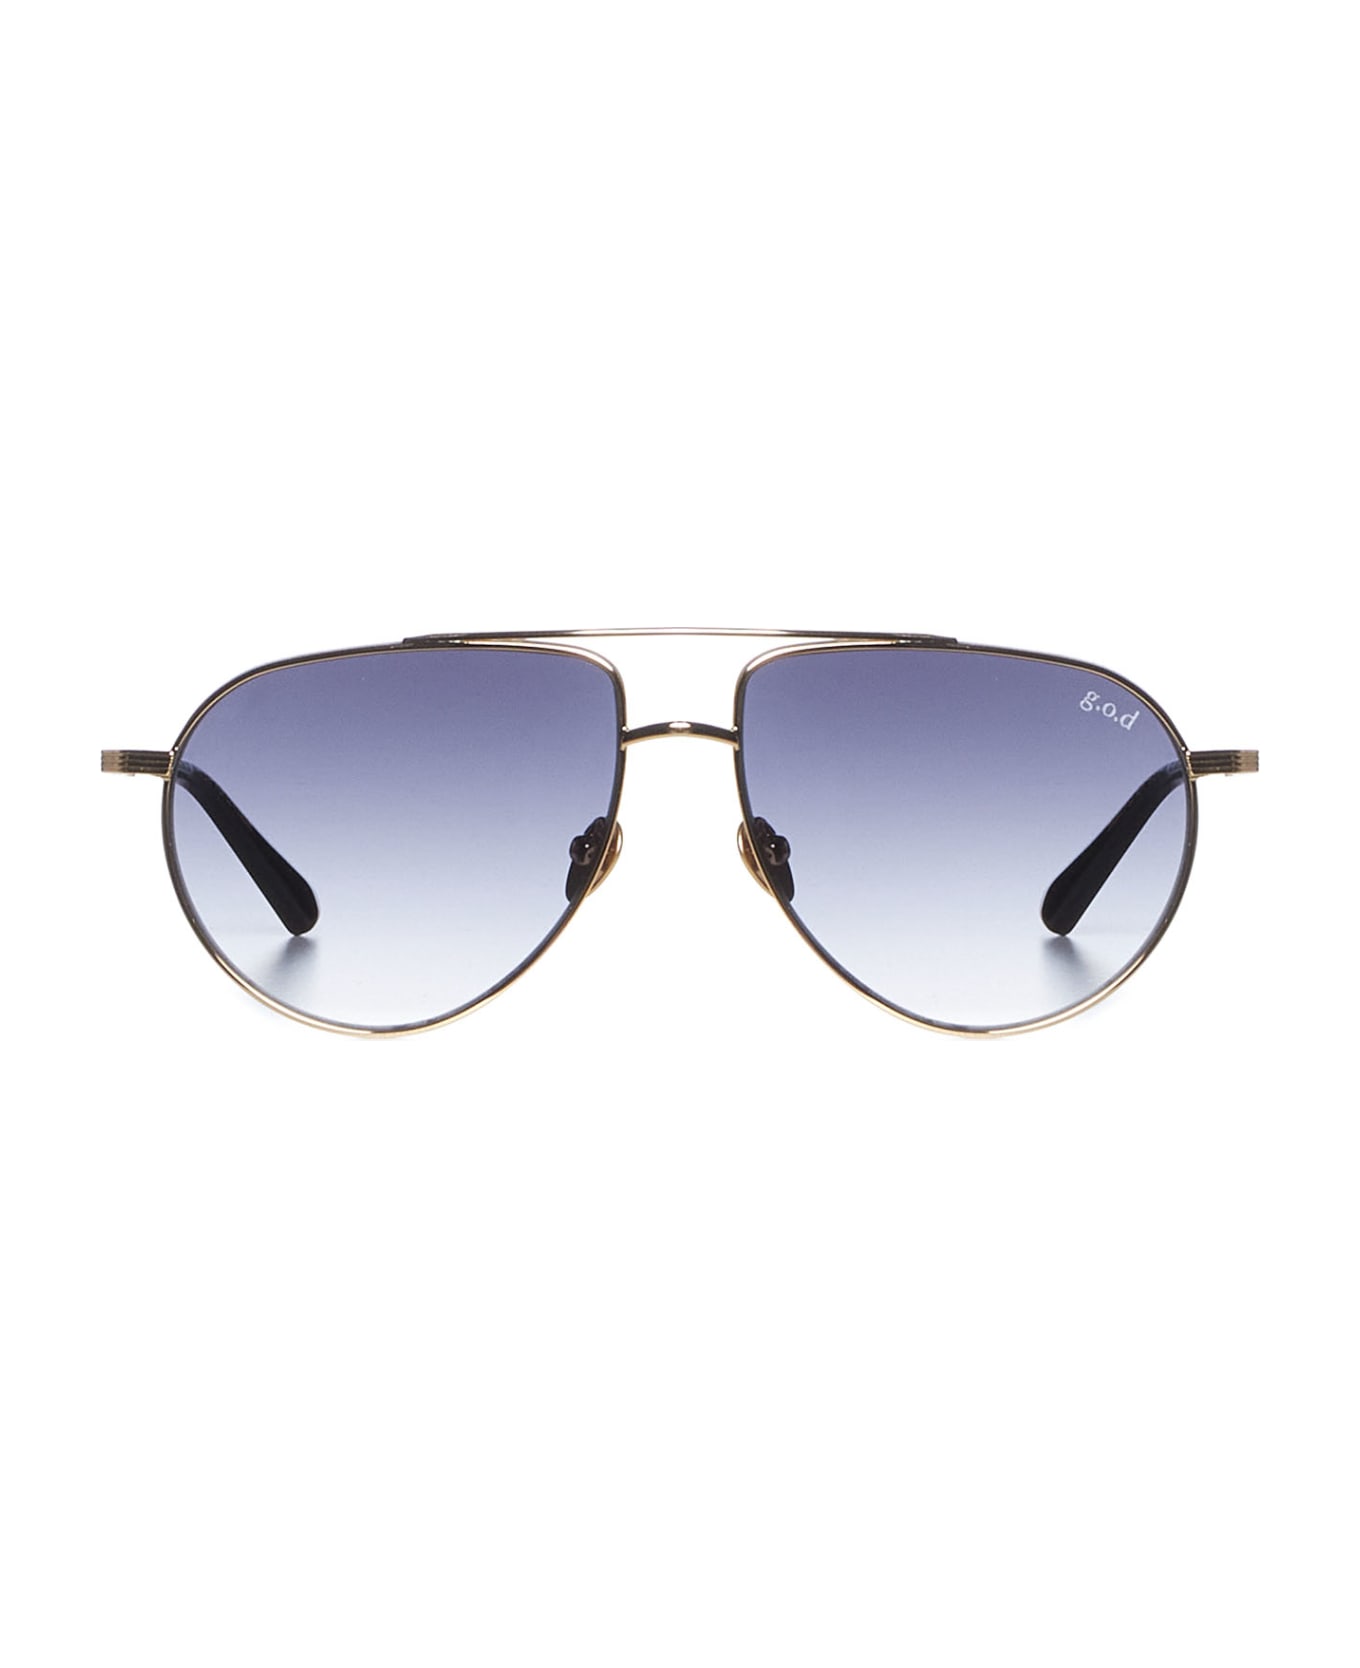 g.o.d Sunglasses - Gold black grey